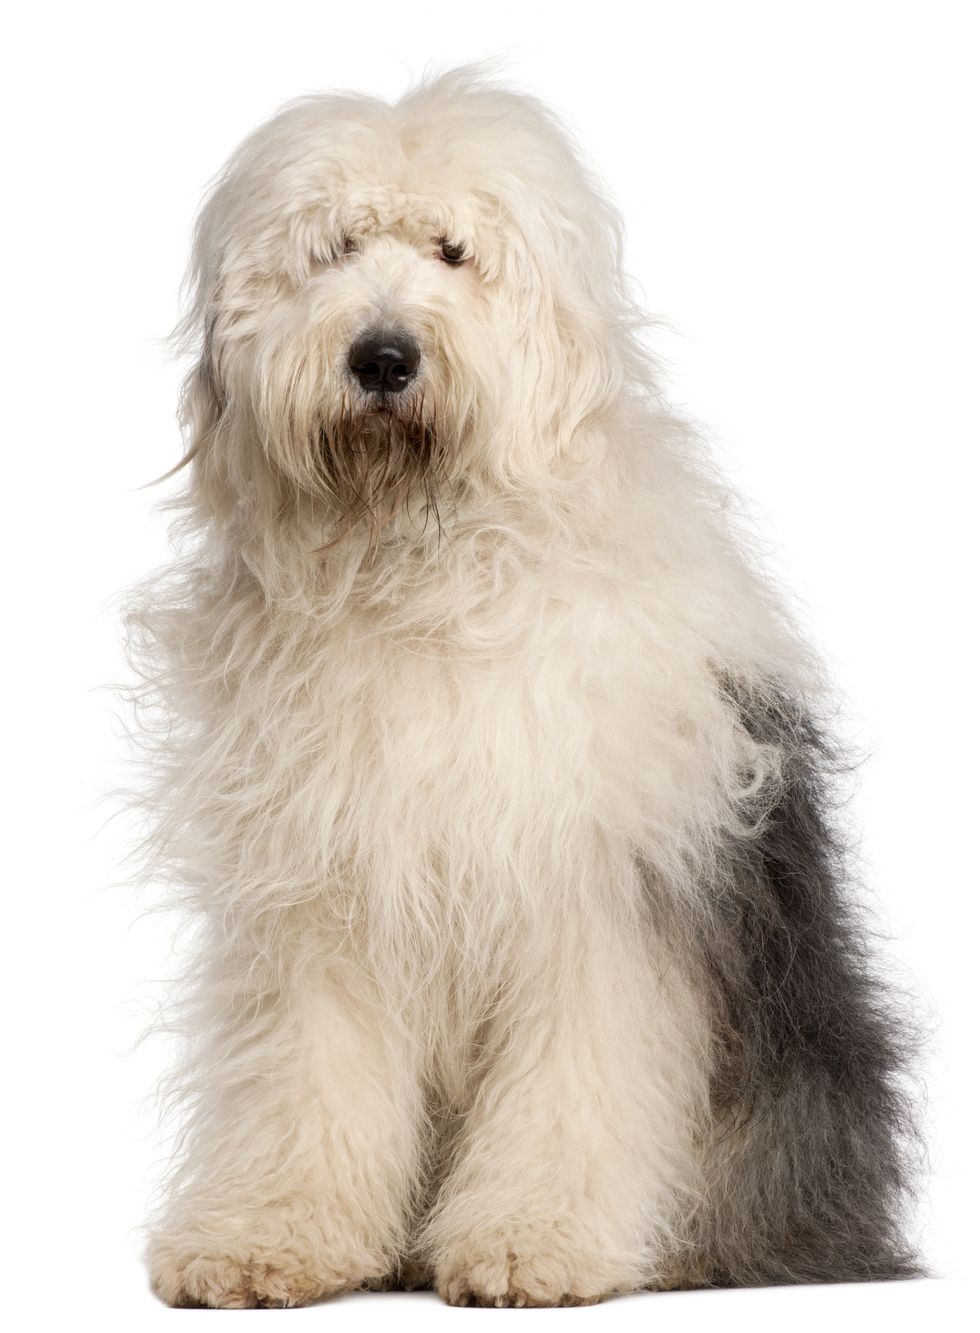 big fluffy dog breed like the old english sheepdog